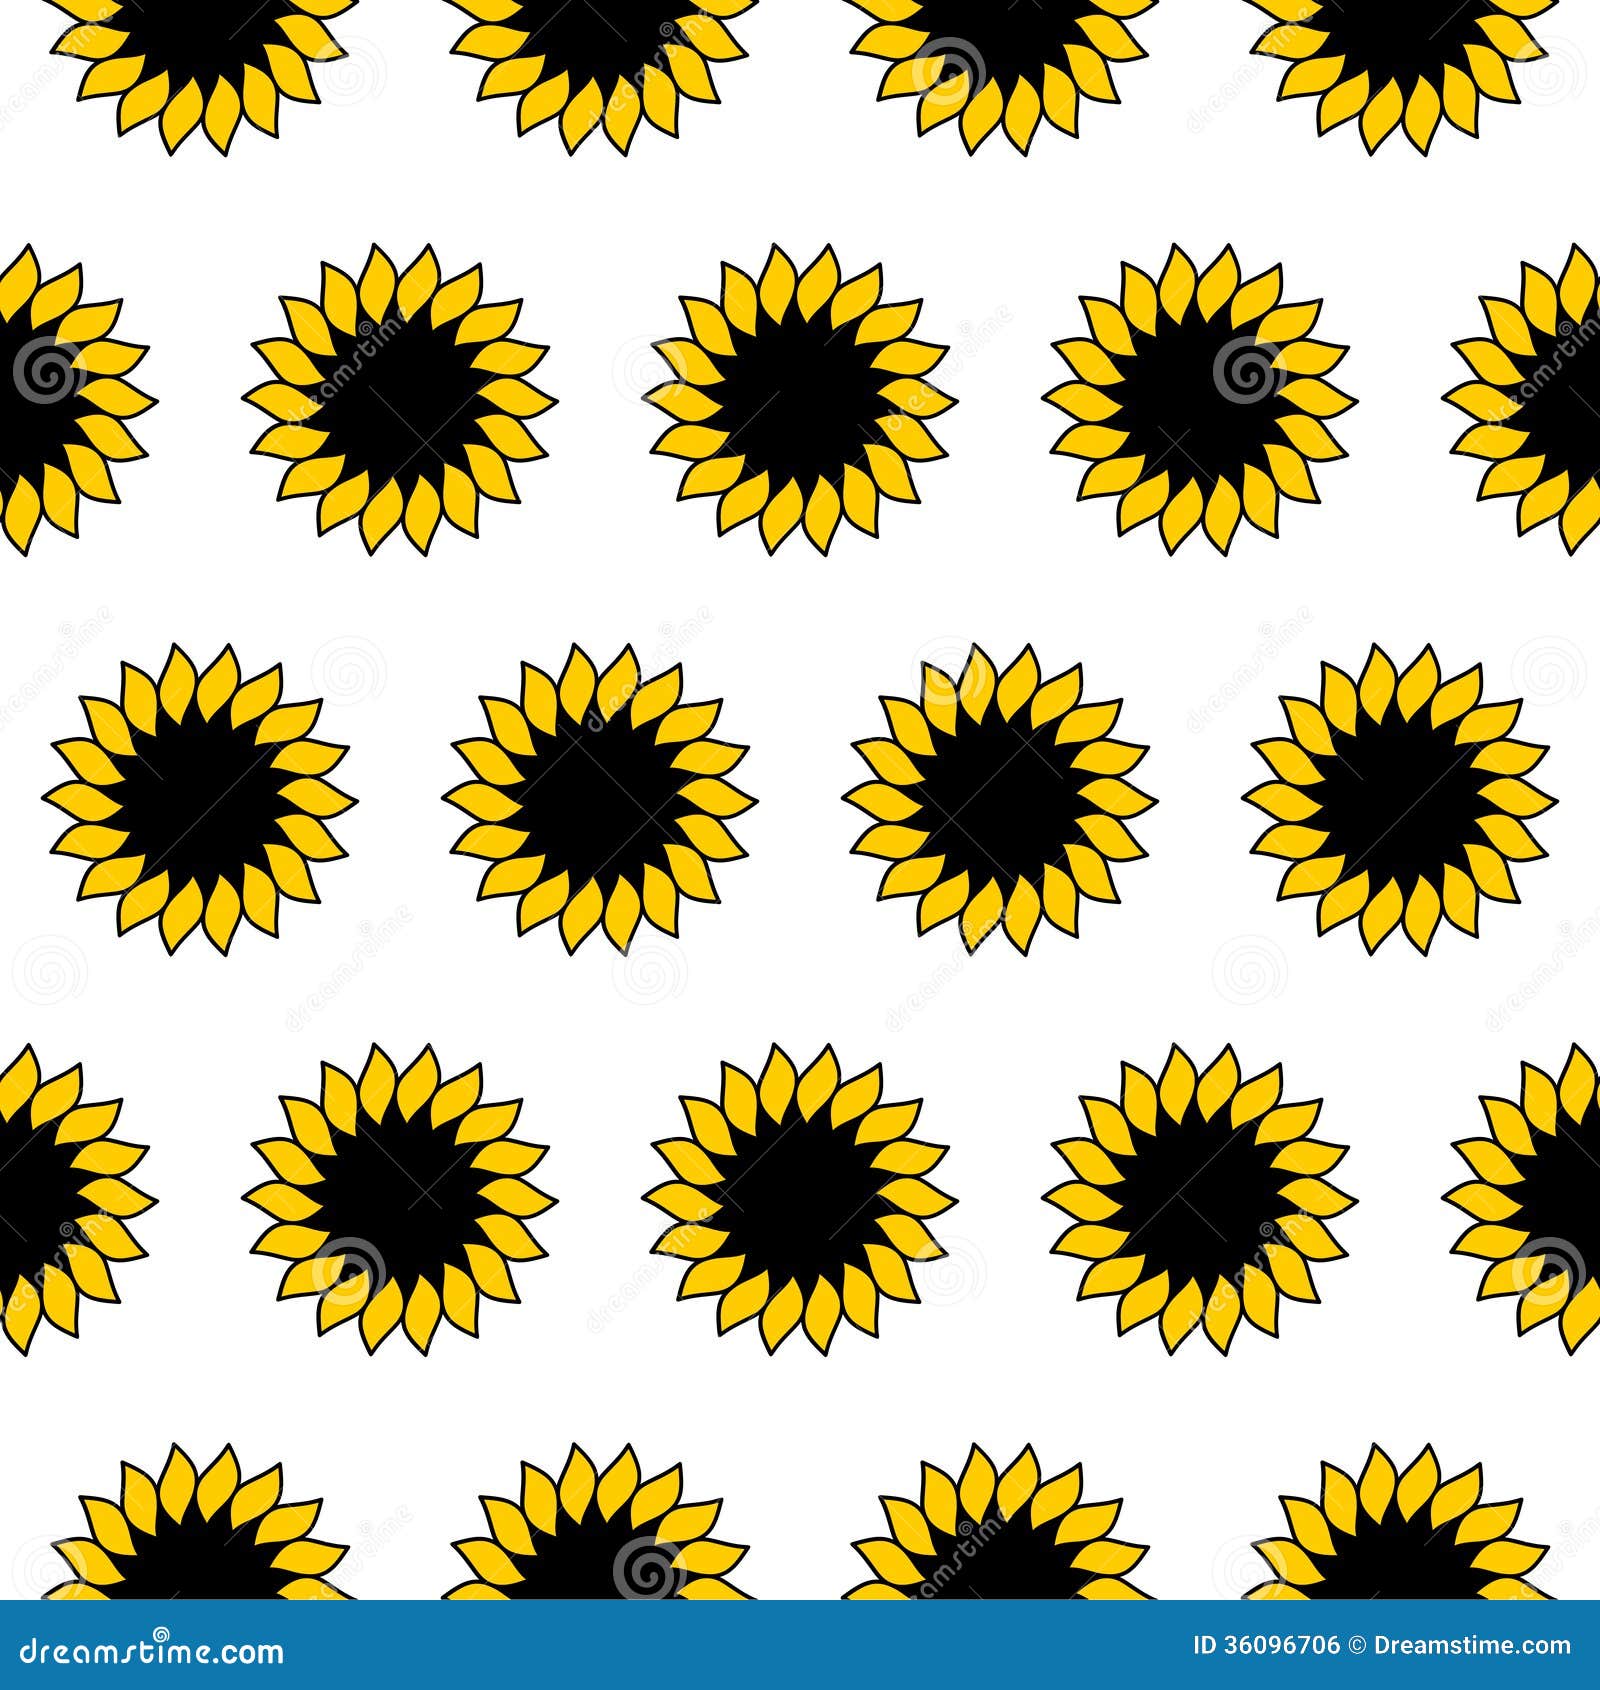 Sunflowers Tumblr Header